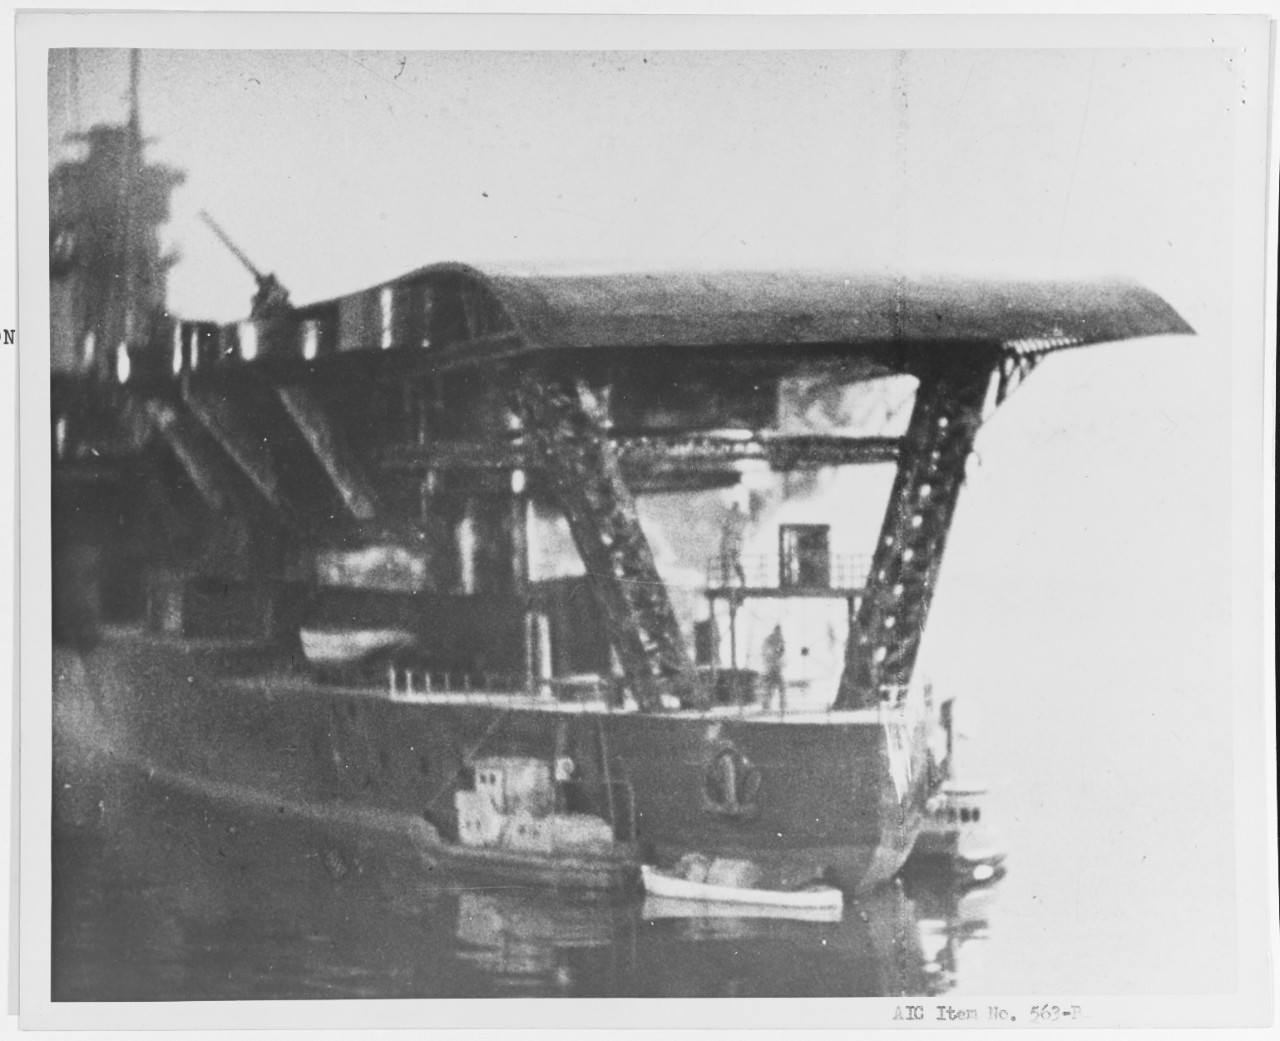 KAGA (Japanese aircraft carrier, 1921)